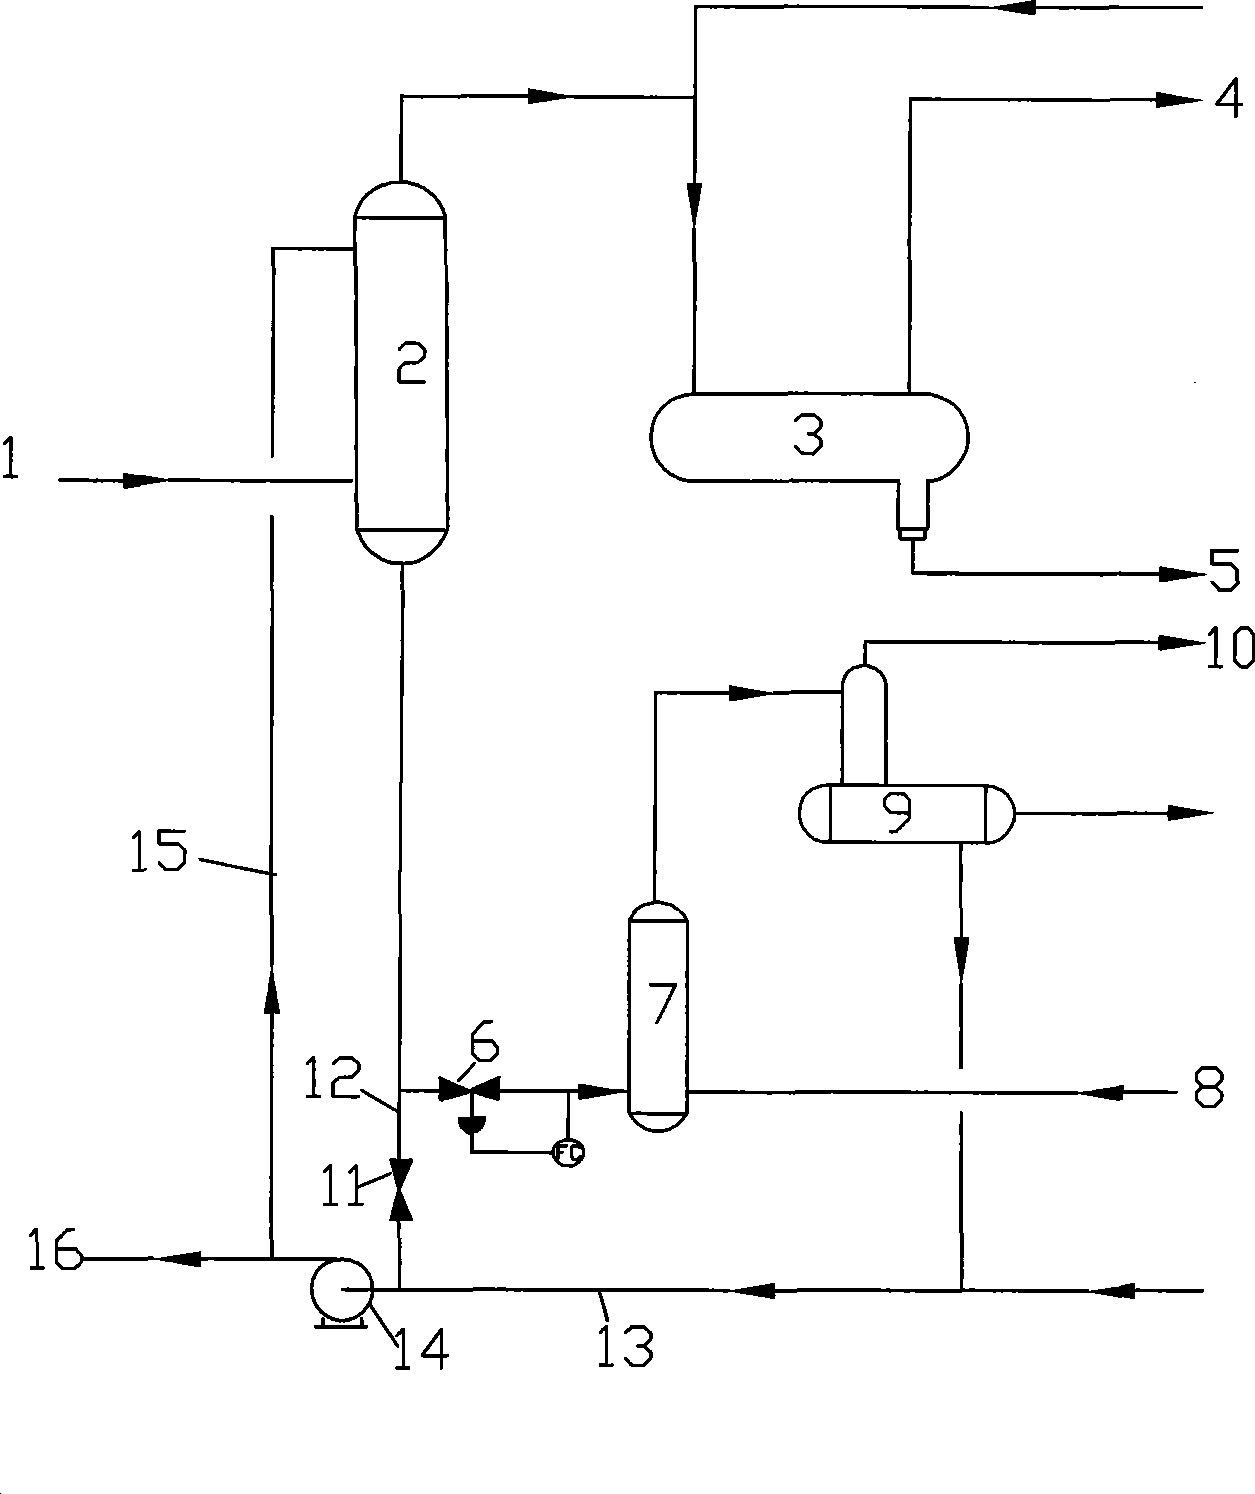 Liquid gas sweetening alkali liquor oxidized regeneration method and apparatus